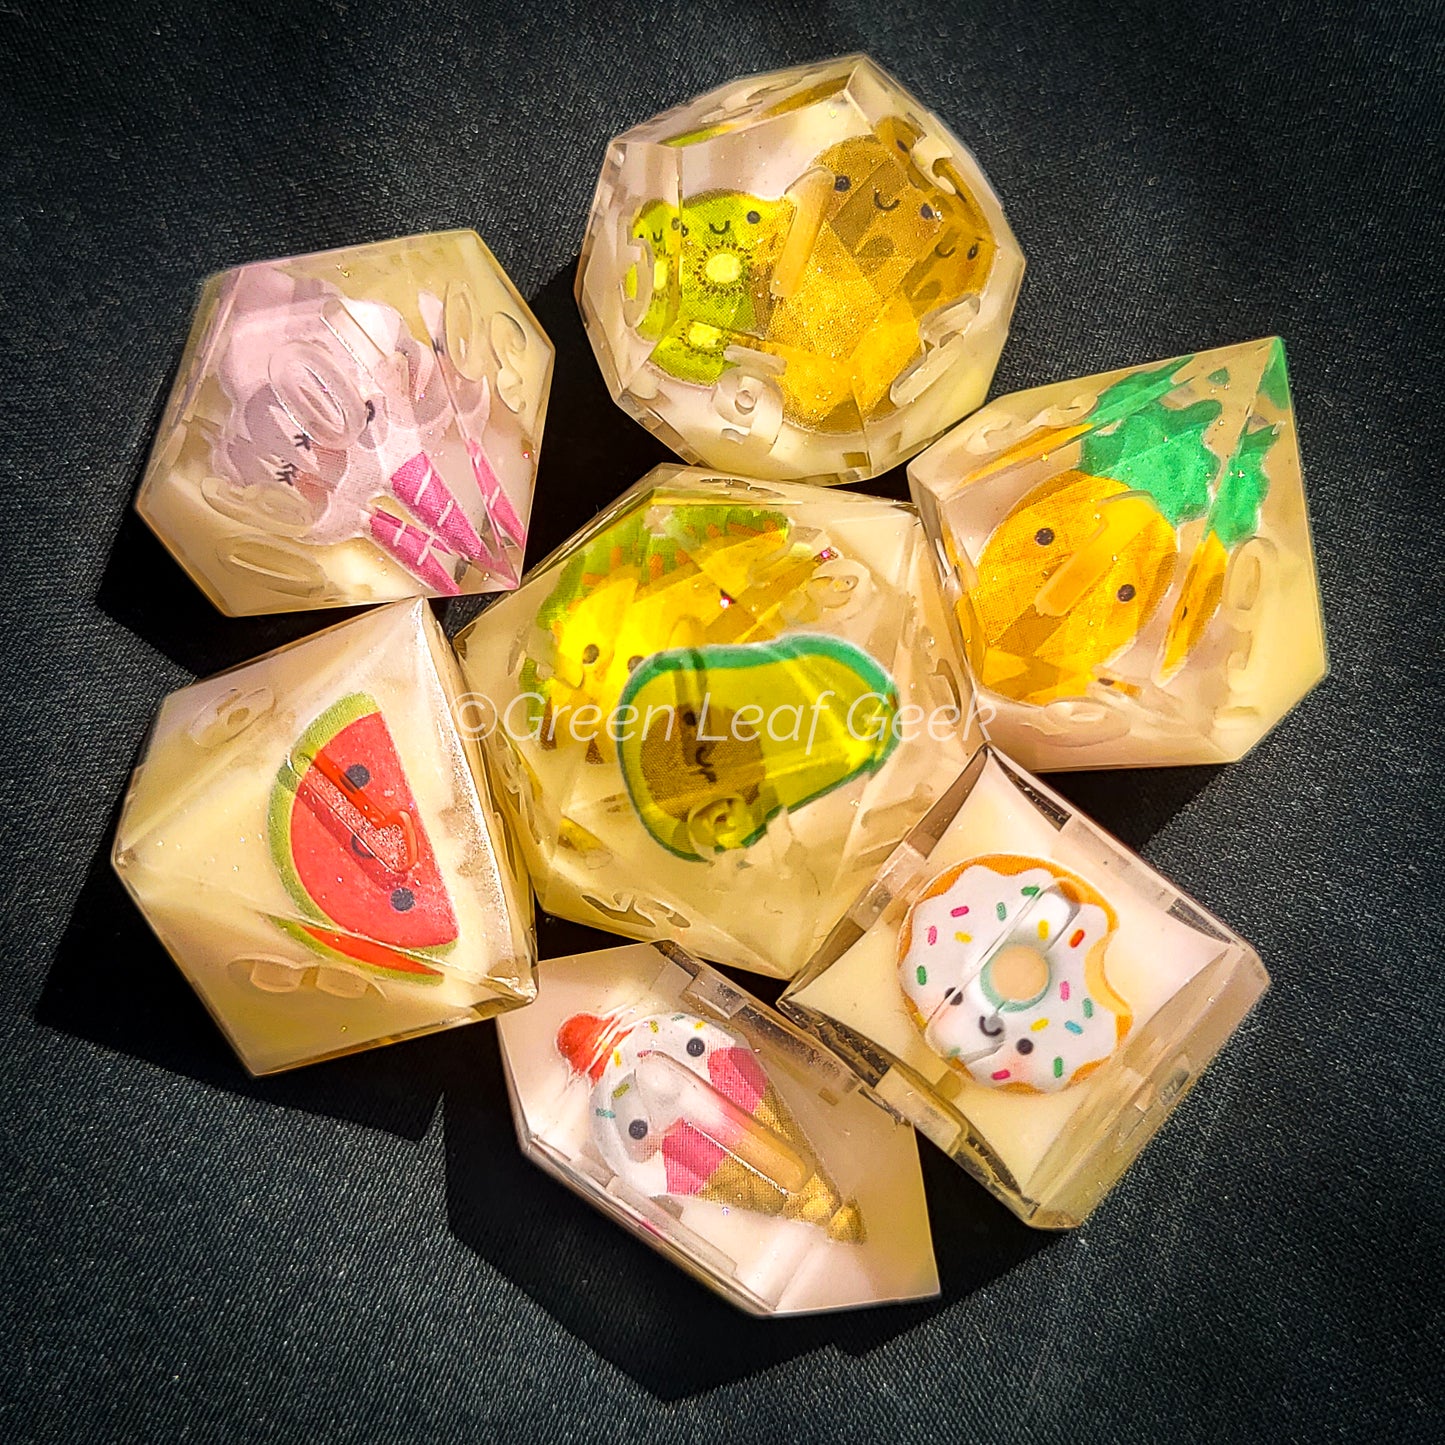 Snack Attack (yellow) - choice of ink- handmade sharp edge 7-piece dice set